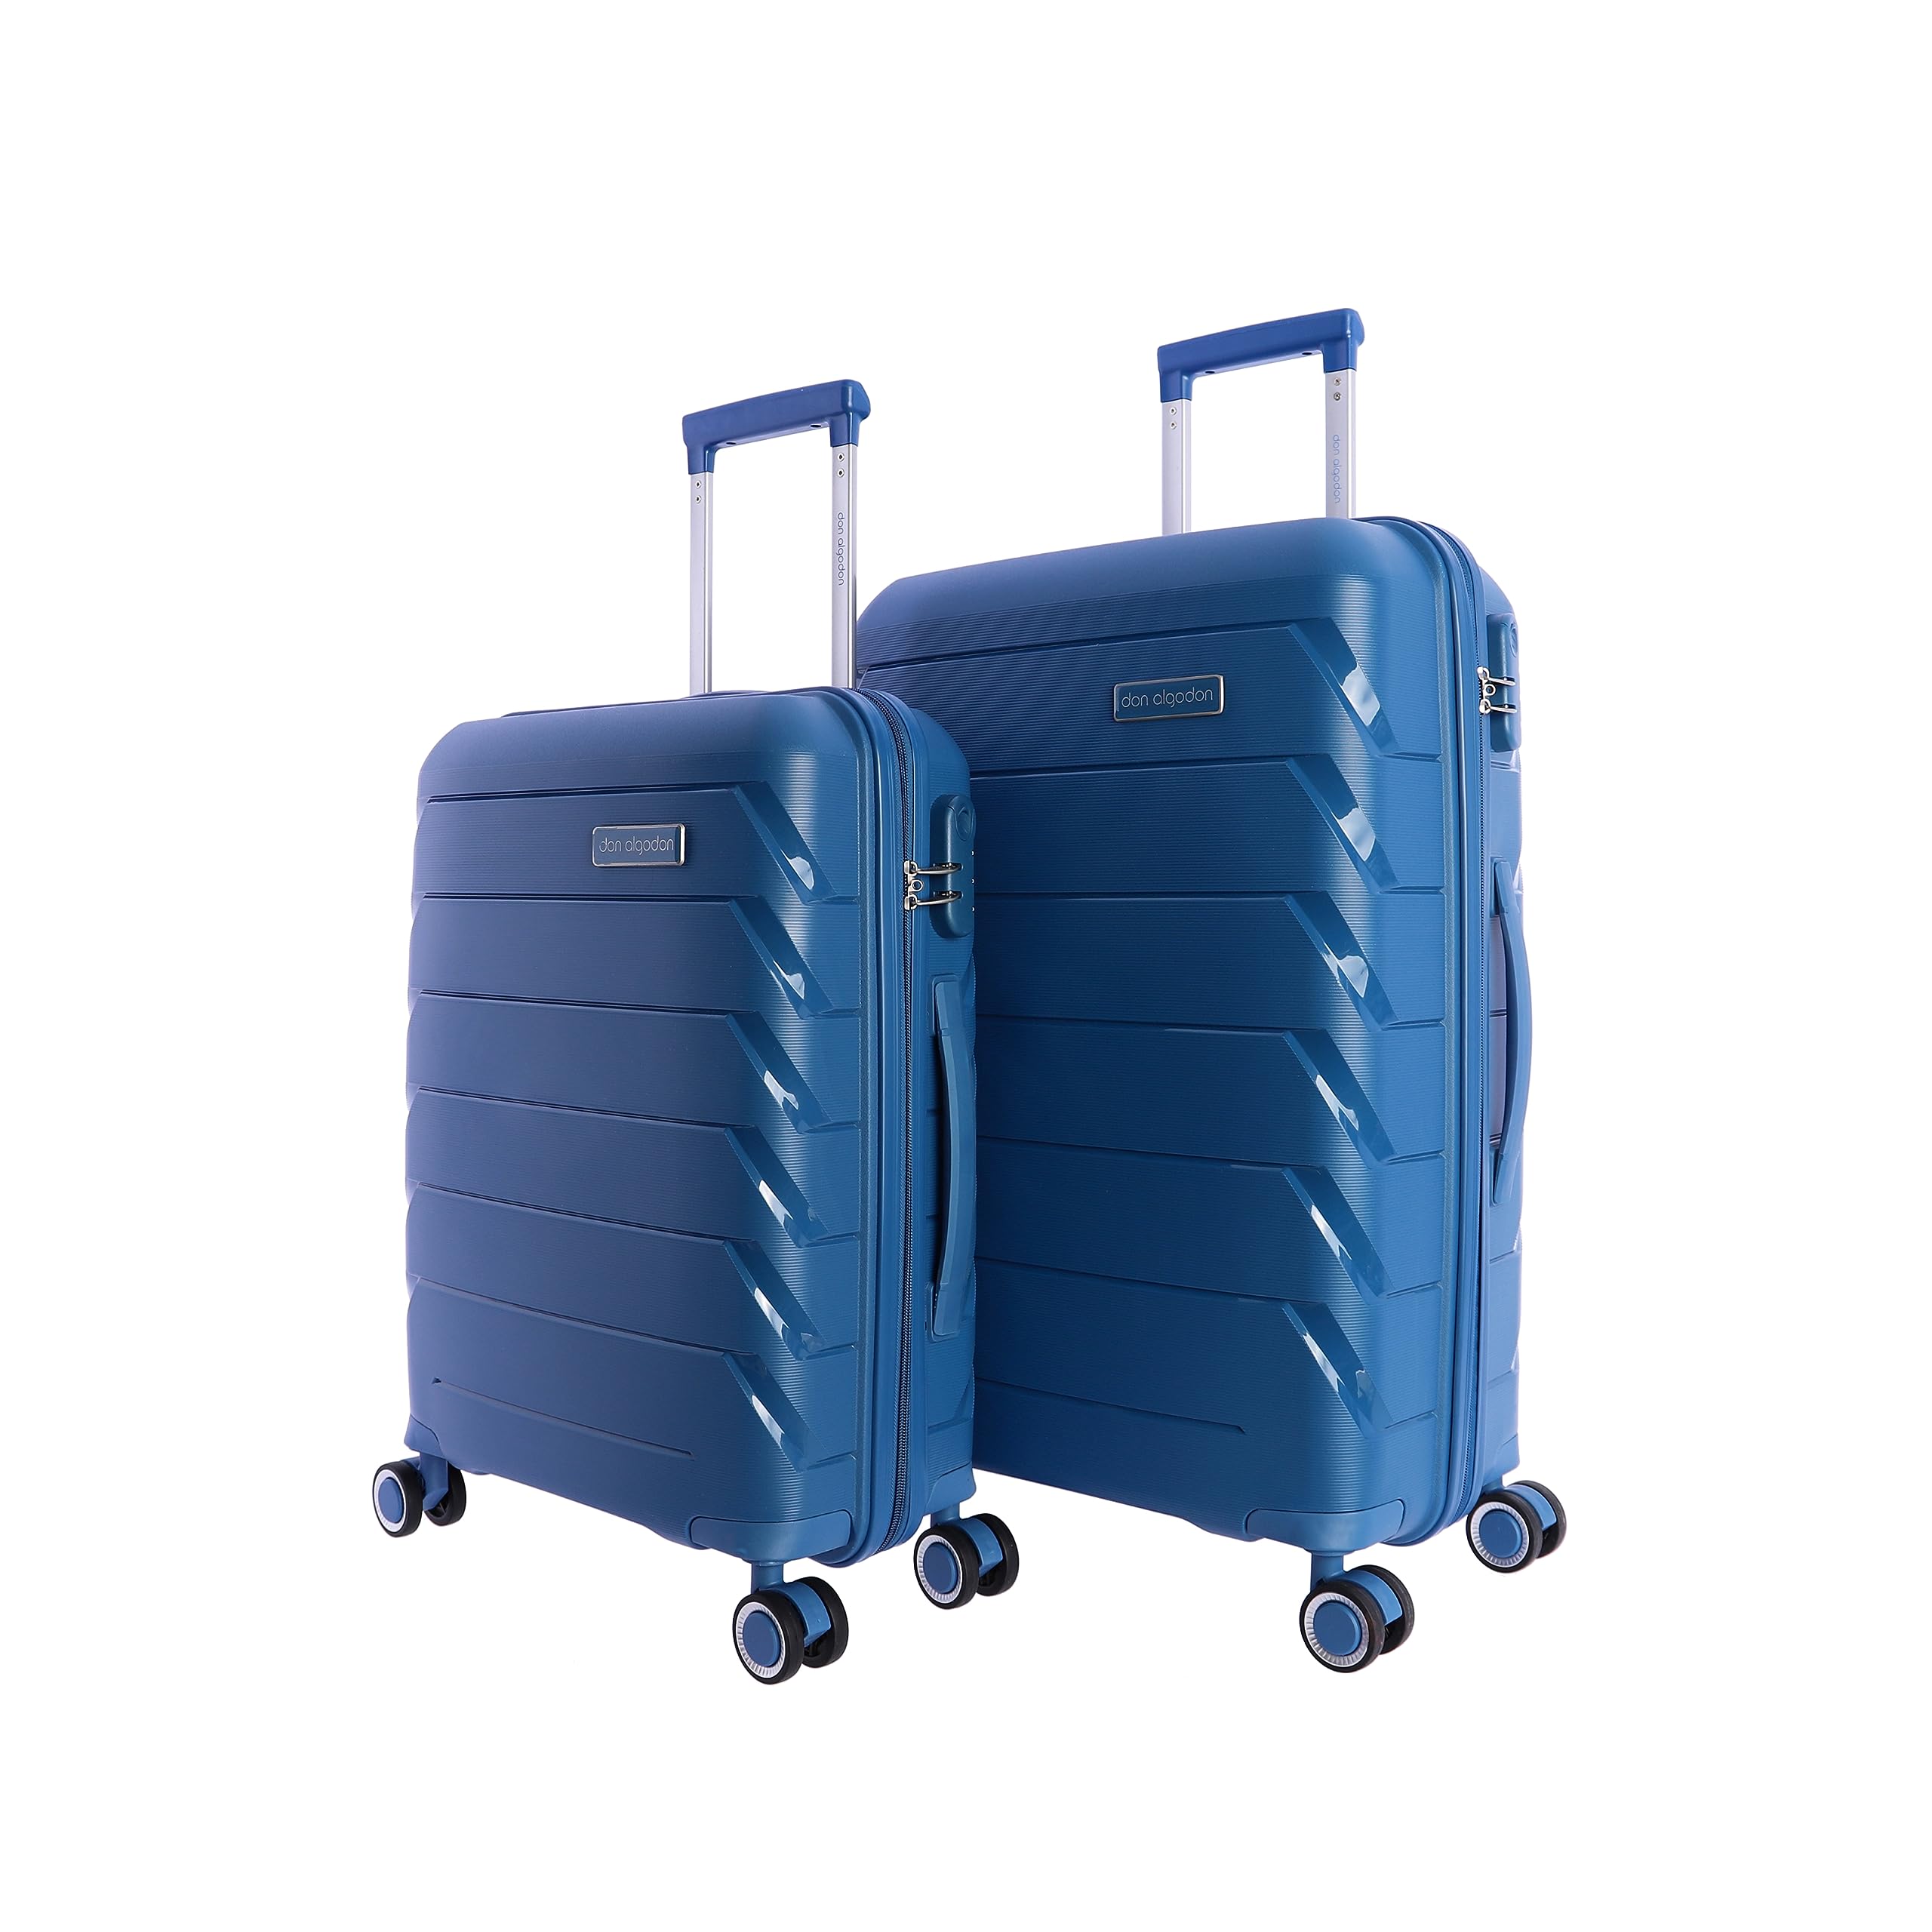 Don Algodon Kofferset - Reisekoffer-Set - Kabinenkoffer - Reisekoffer - Kabinenkoffer 55 x 40 x 20 cm und mittlerer Koffer 4 Räder - Mittelgroßer Reisekoffer - Kabinenkoffer, blau, 64x44x24 cm,